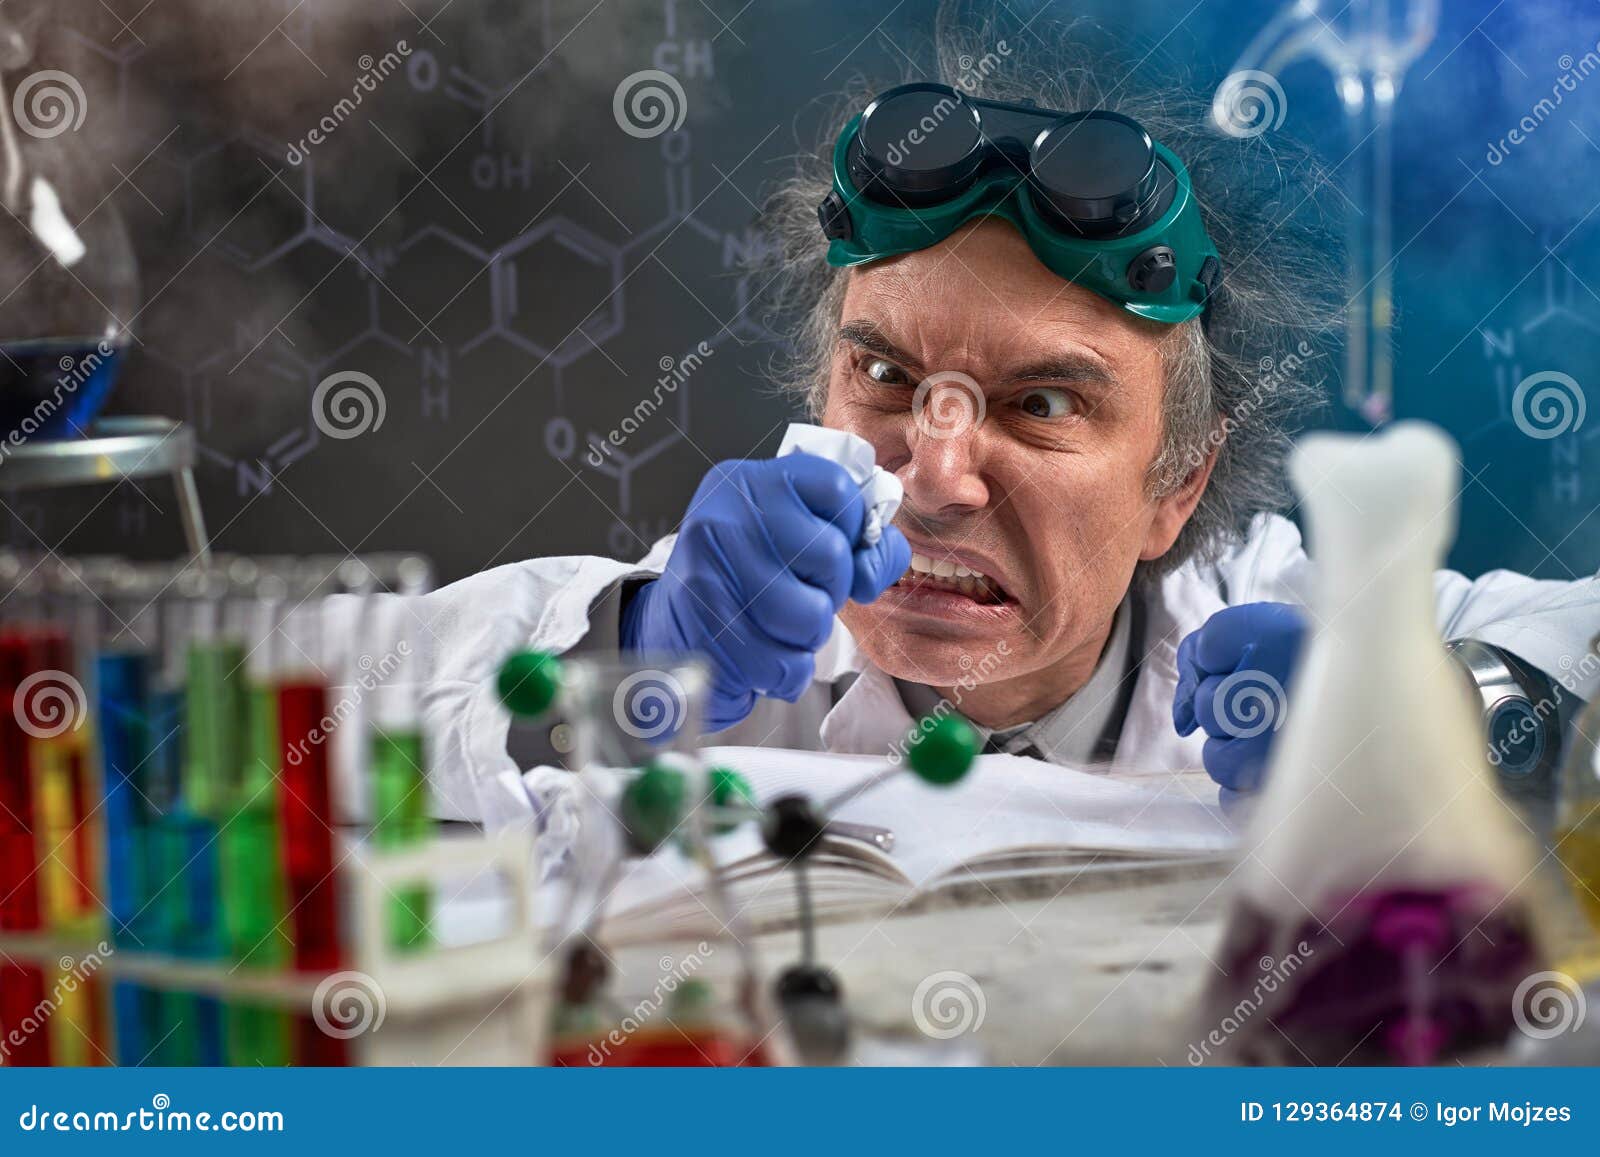 angry chemist wreak their displeasure on paper